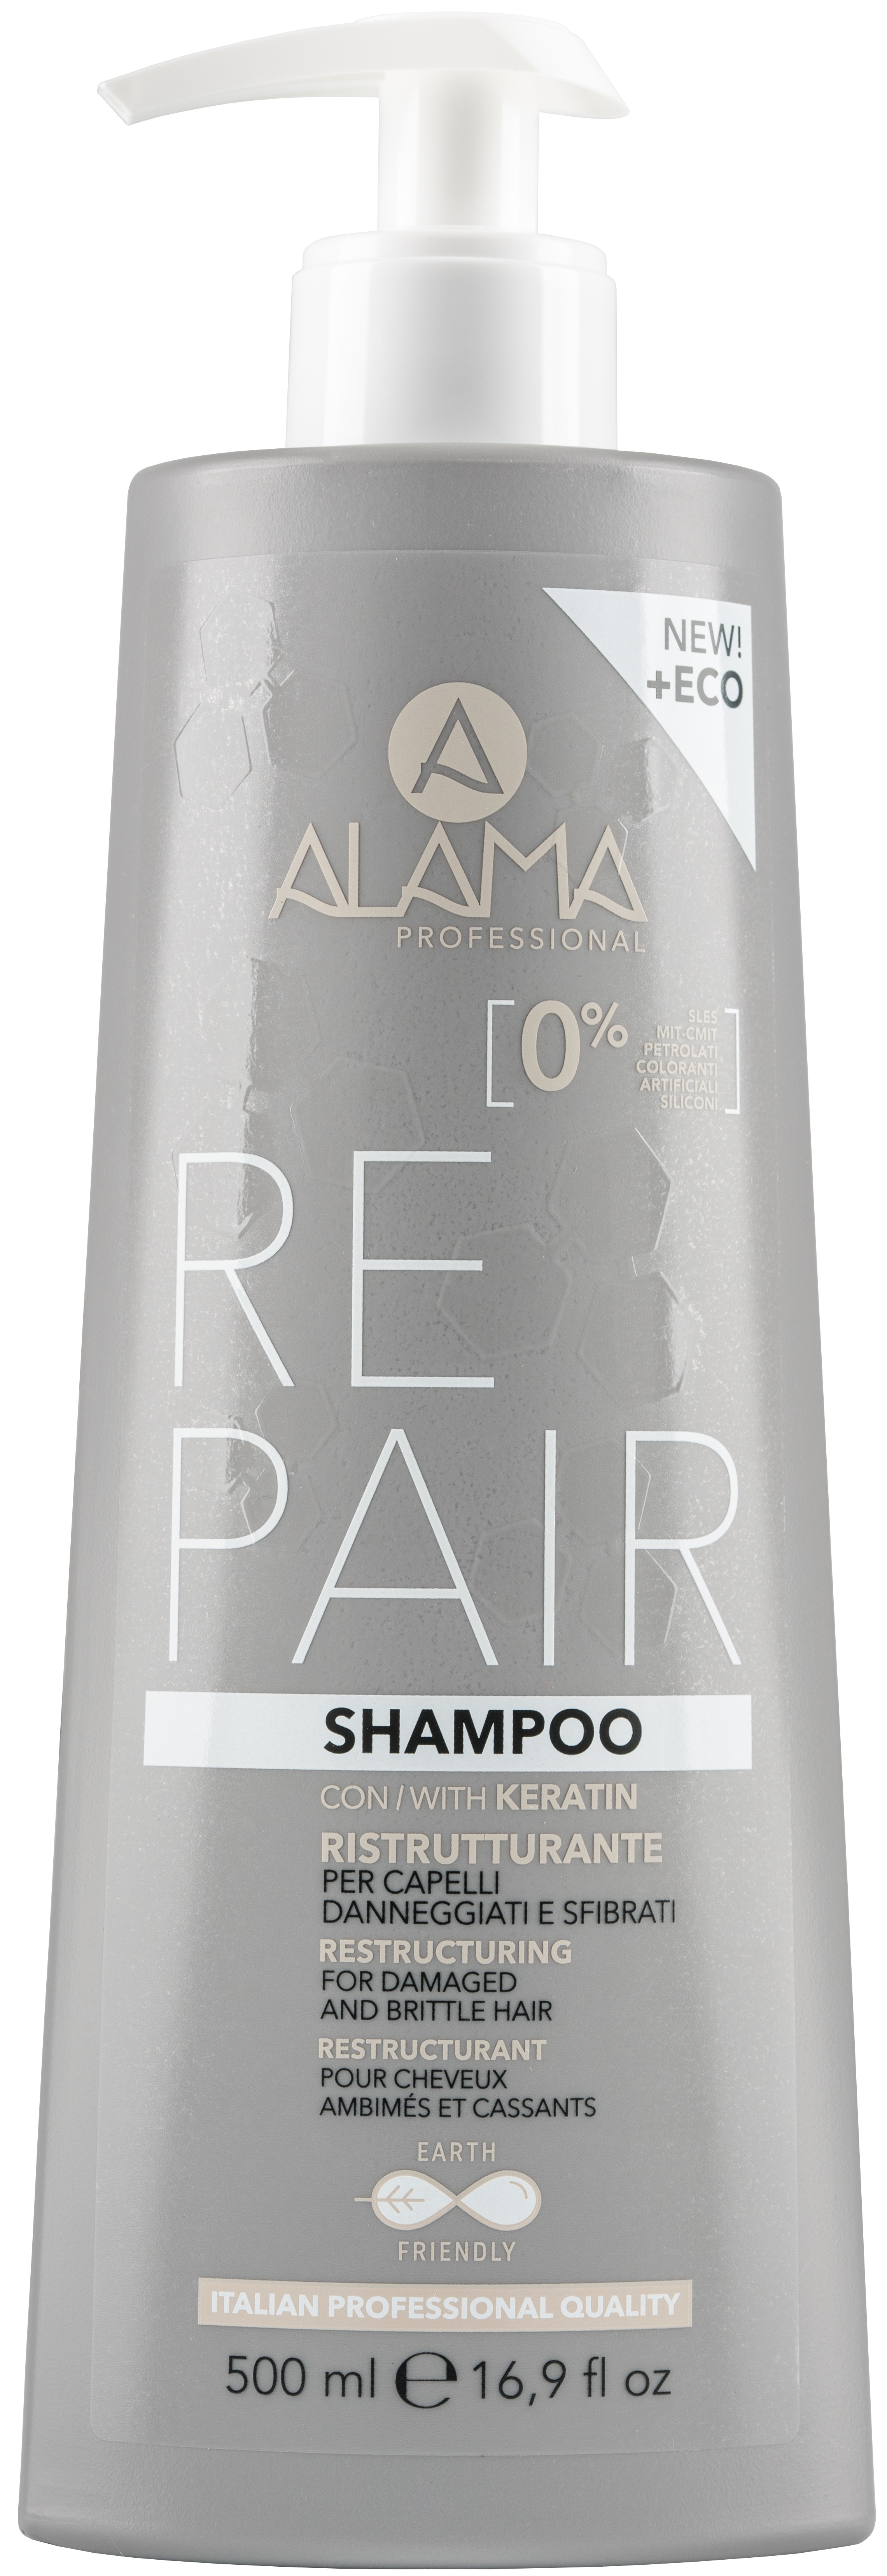 Rundt om røgelse fællesskab Alama Repair Shampoo 500 ml | lyko.com